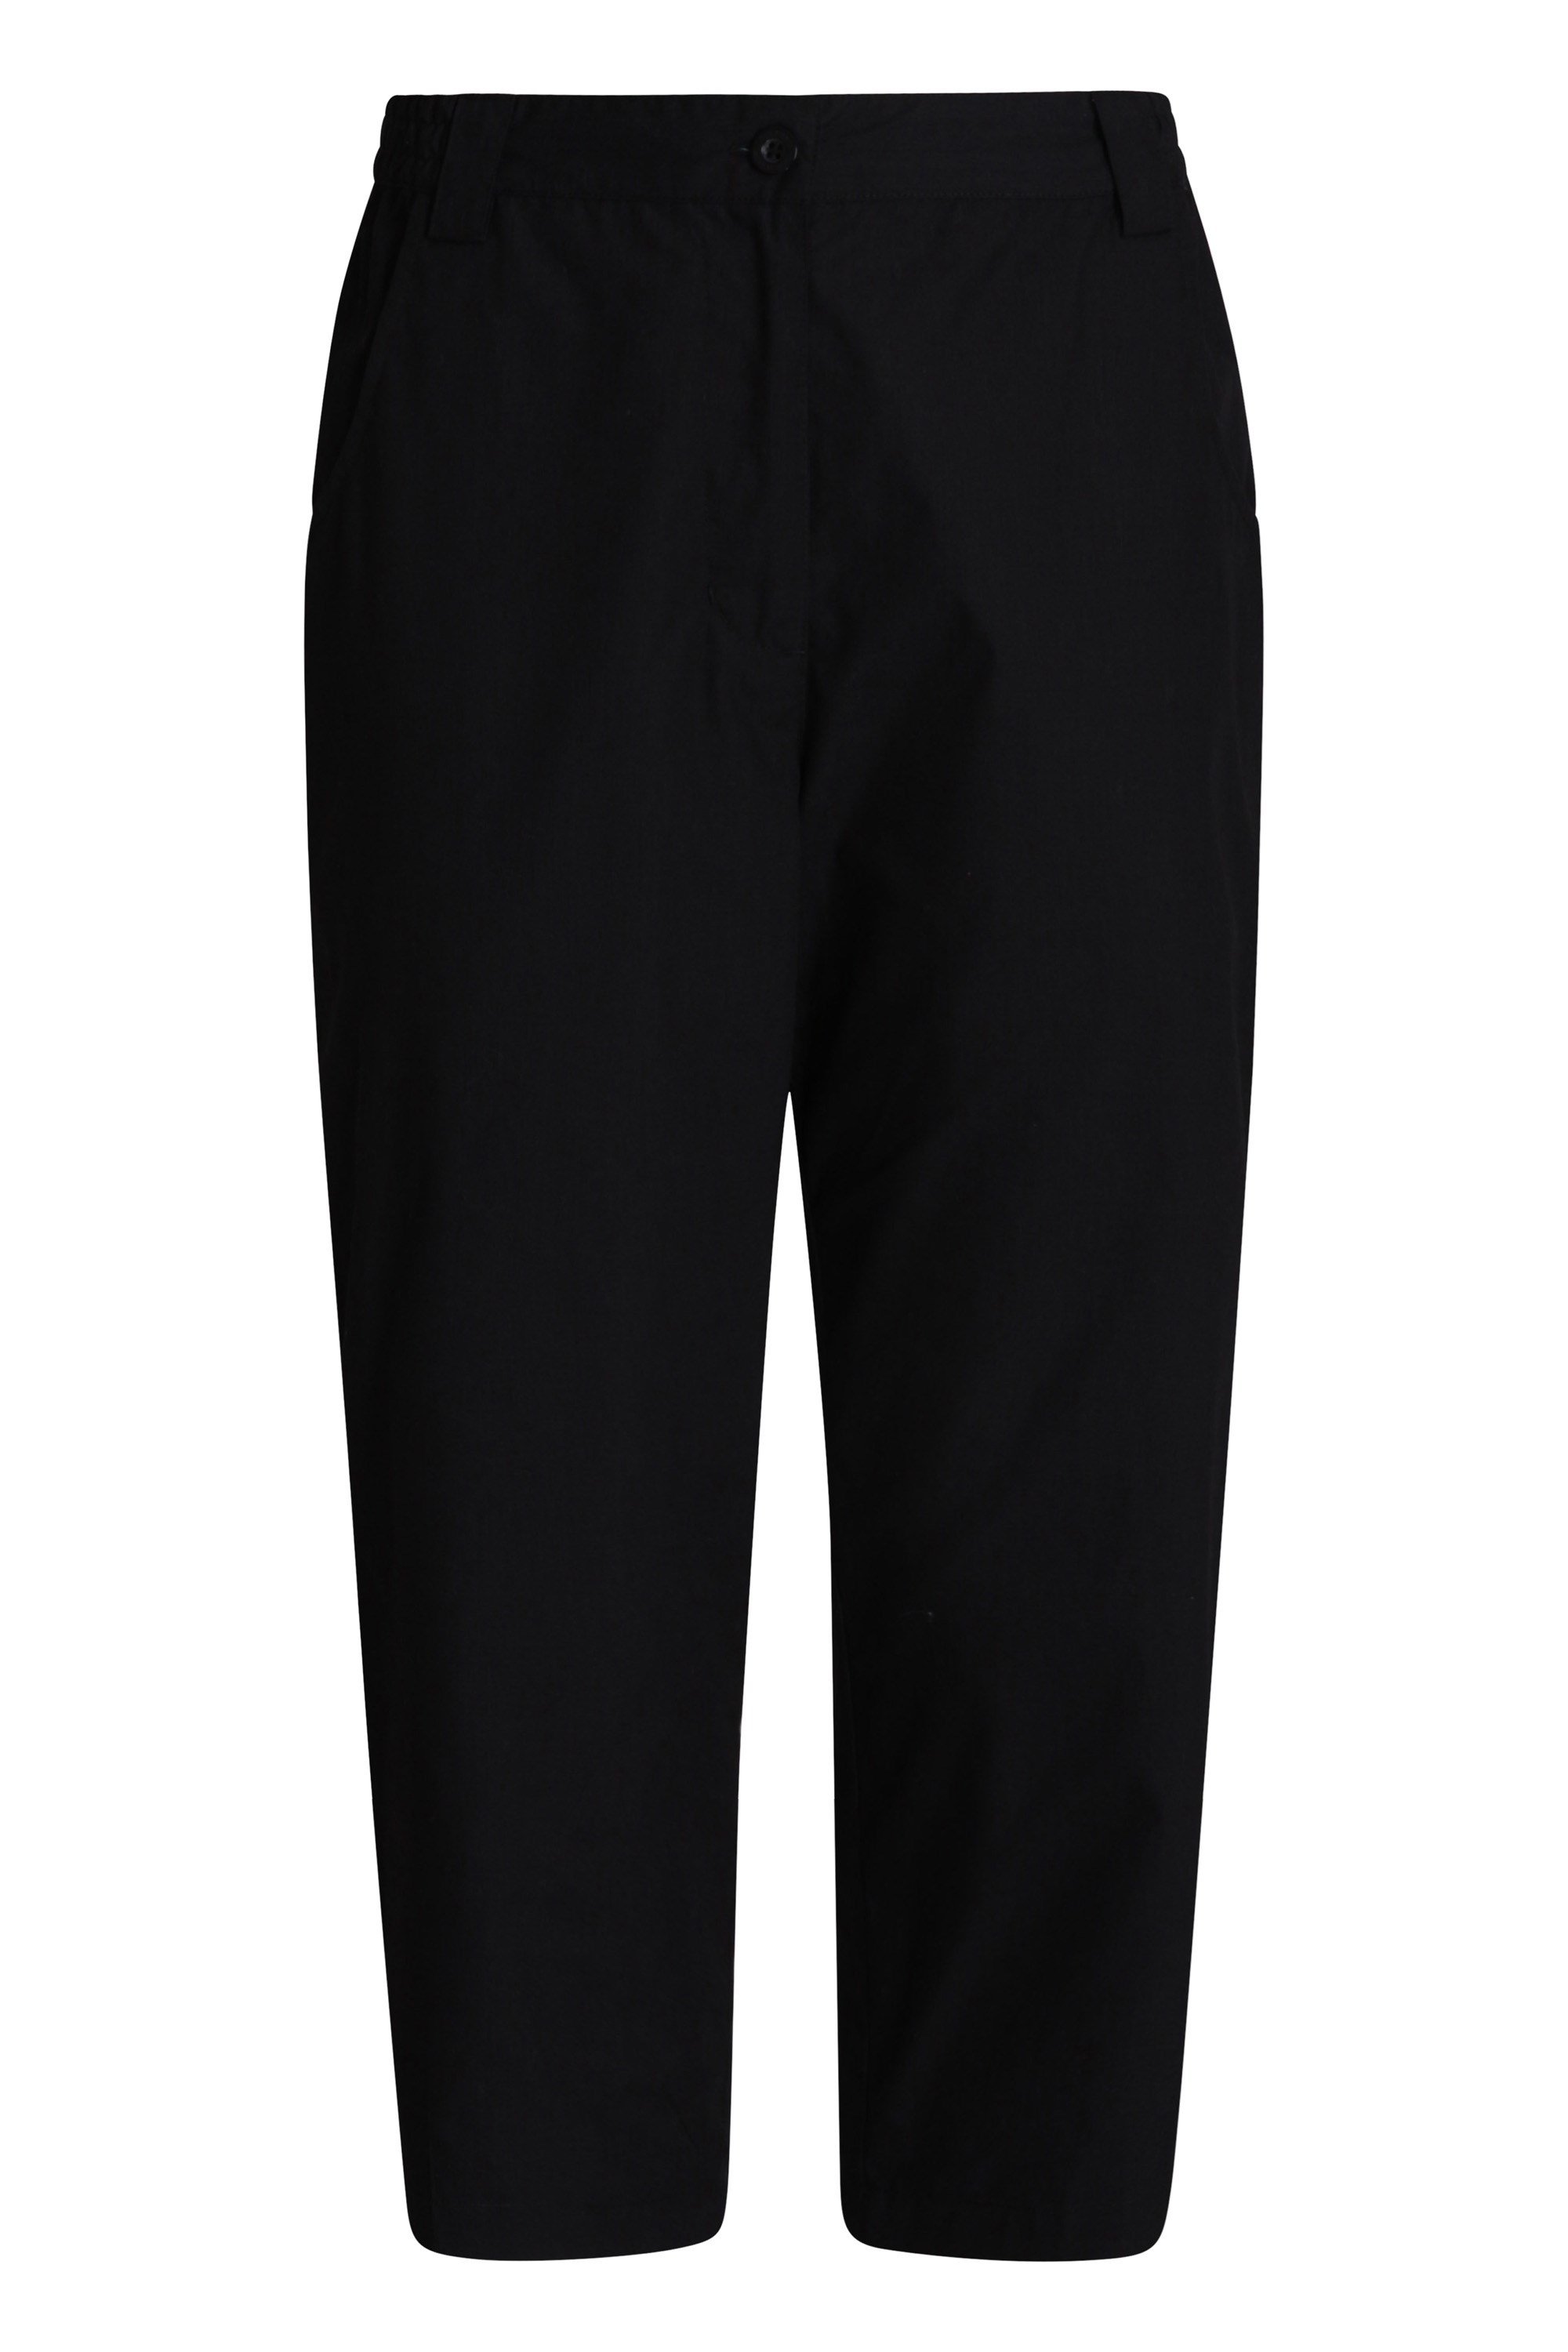 Mountain Warehouse Mountain Warehouse Ladies Capri Trousers Quick Dry Lightweight Pants Womens 